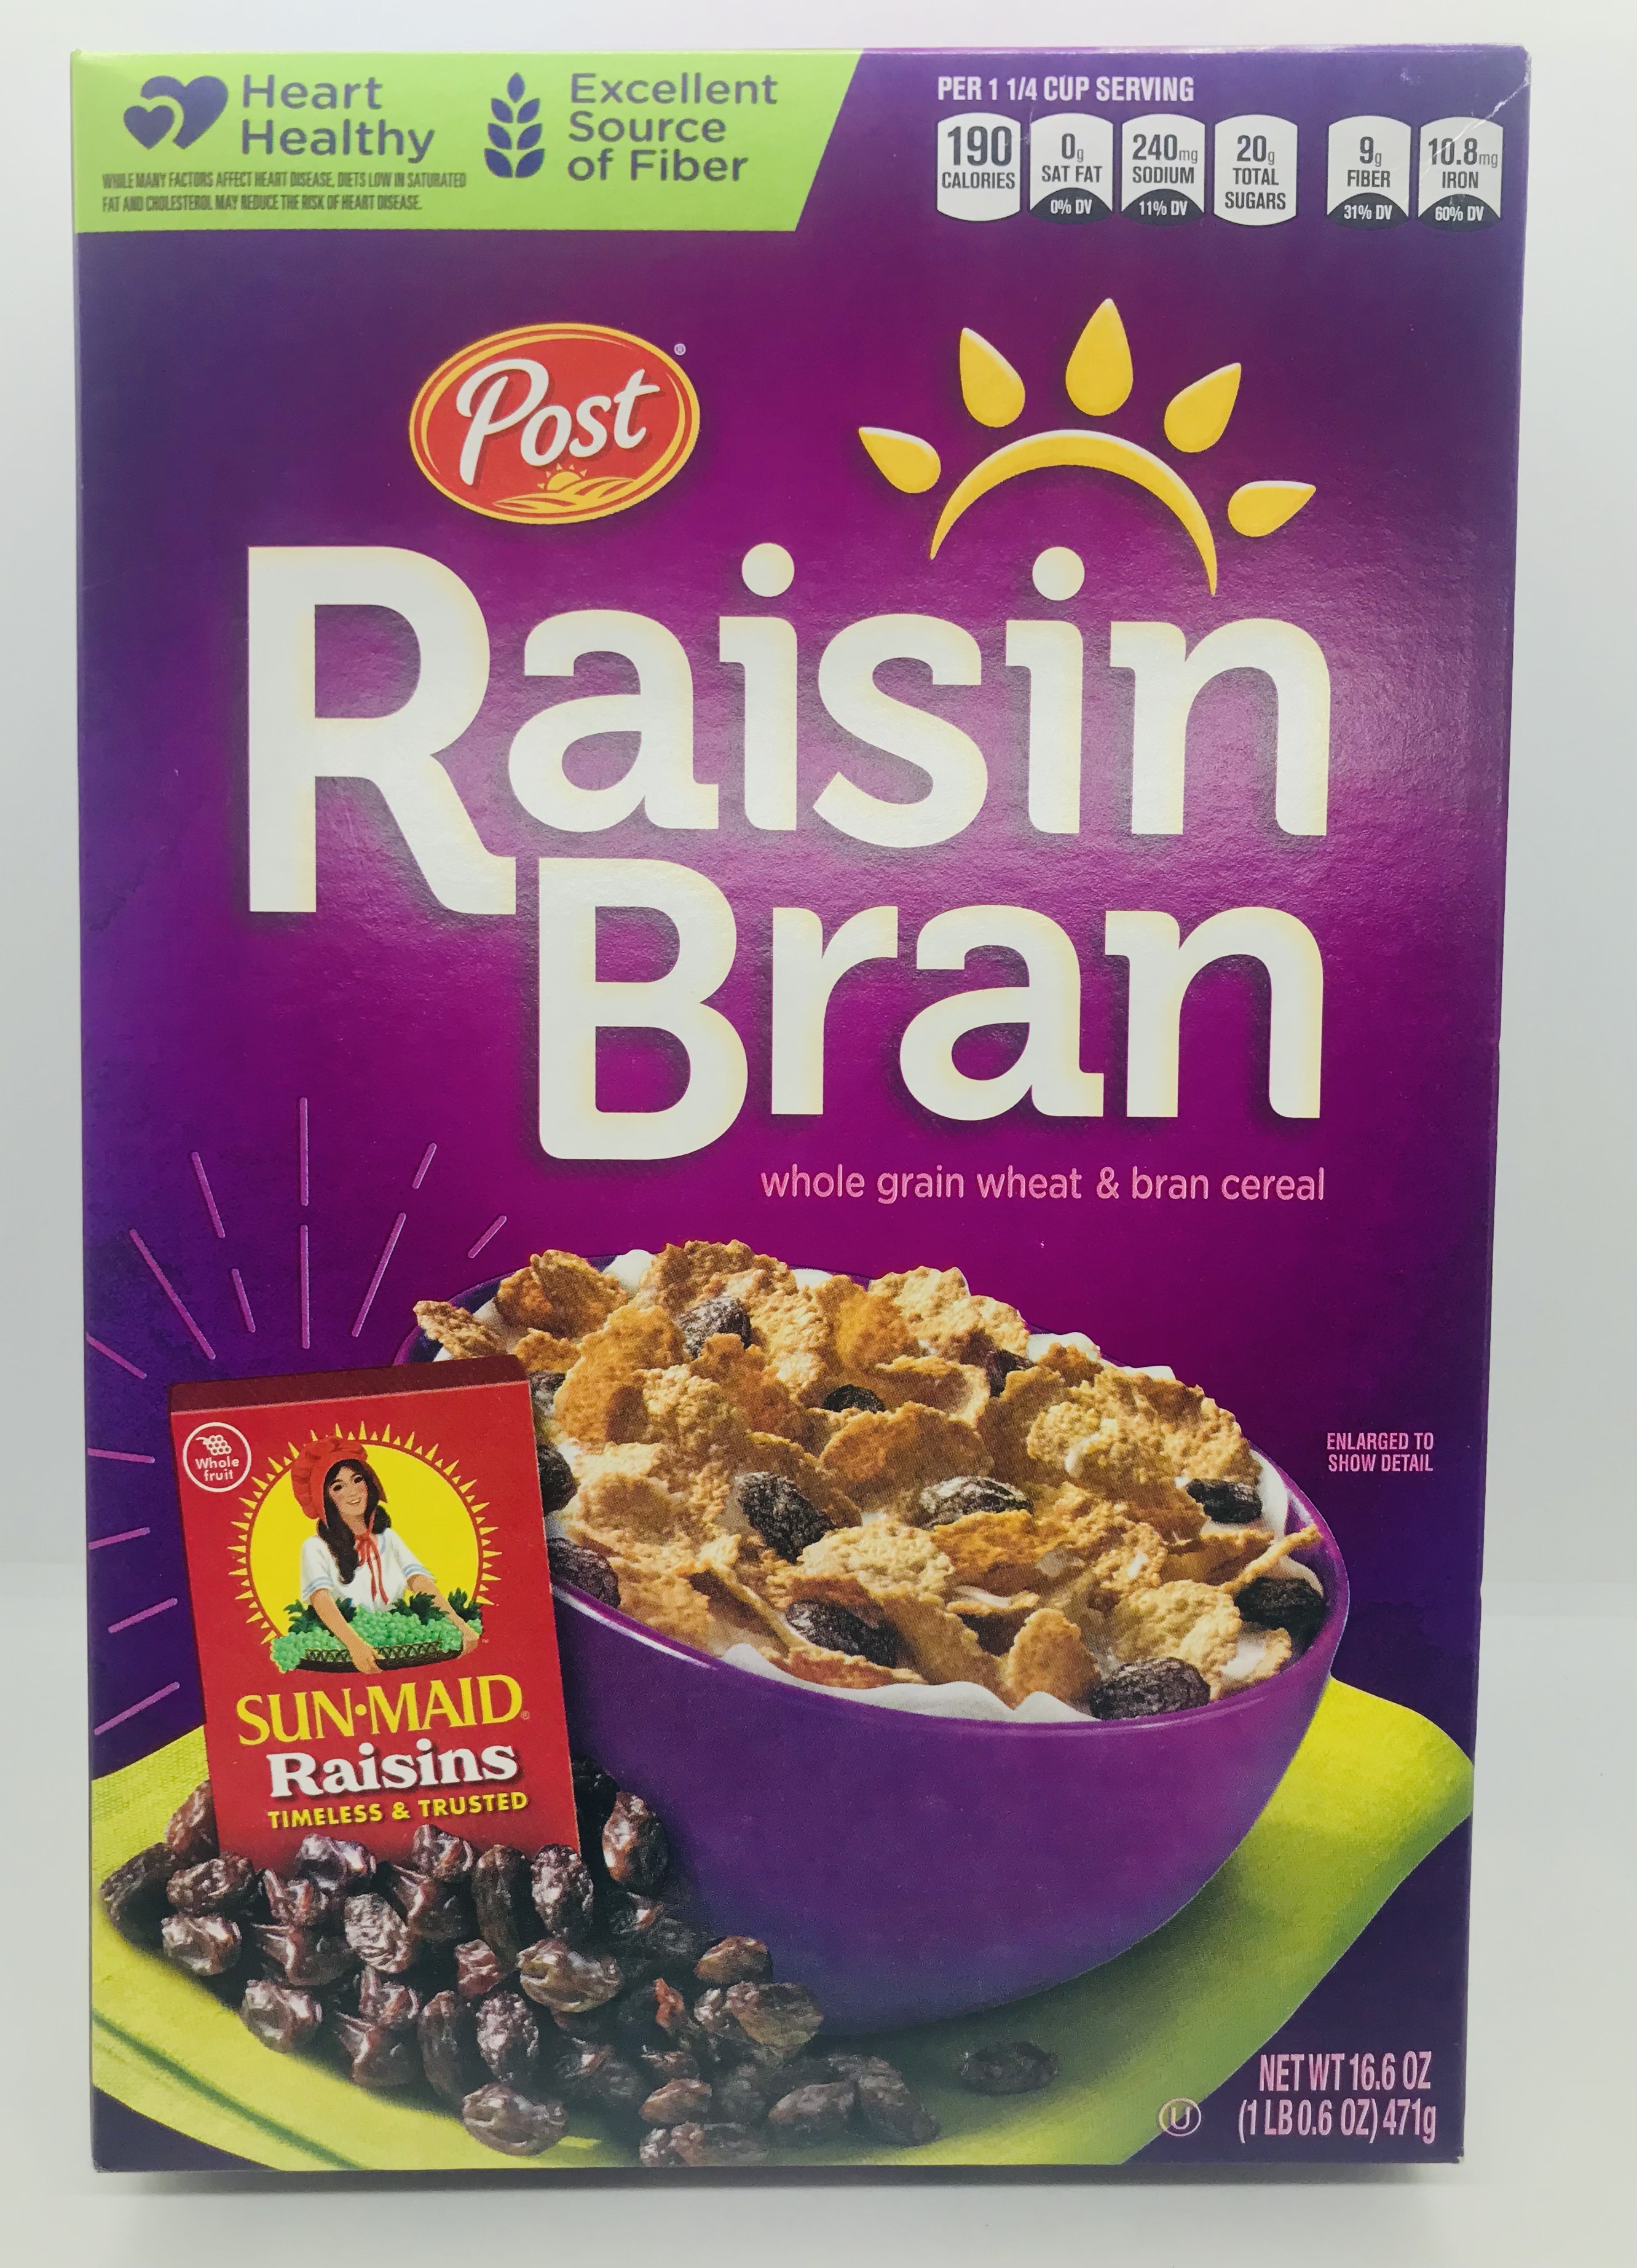 Post Raisin Bran whole grain wheat & Bran cereal 471g. - Gala Apple ...